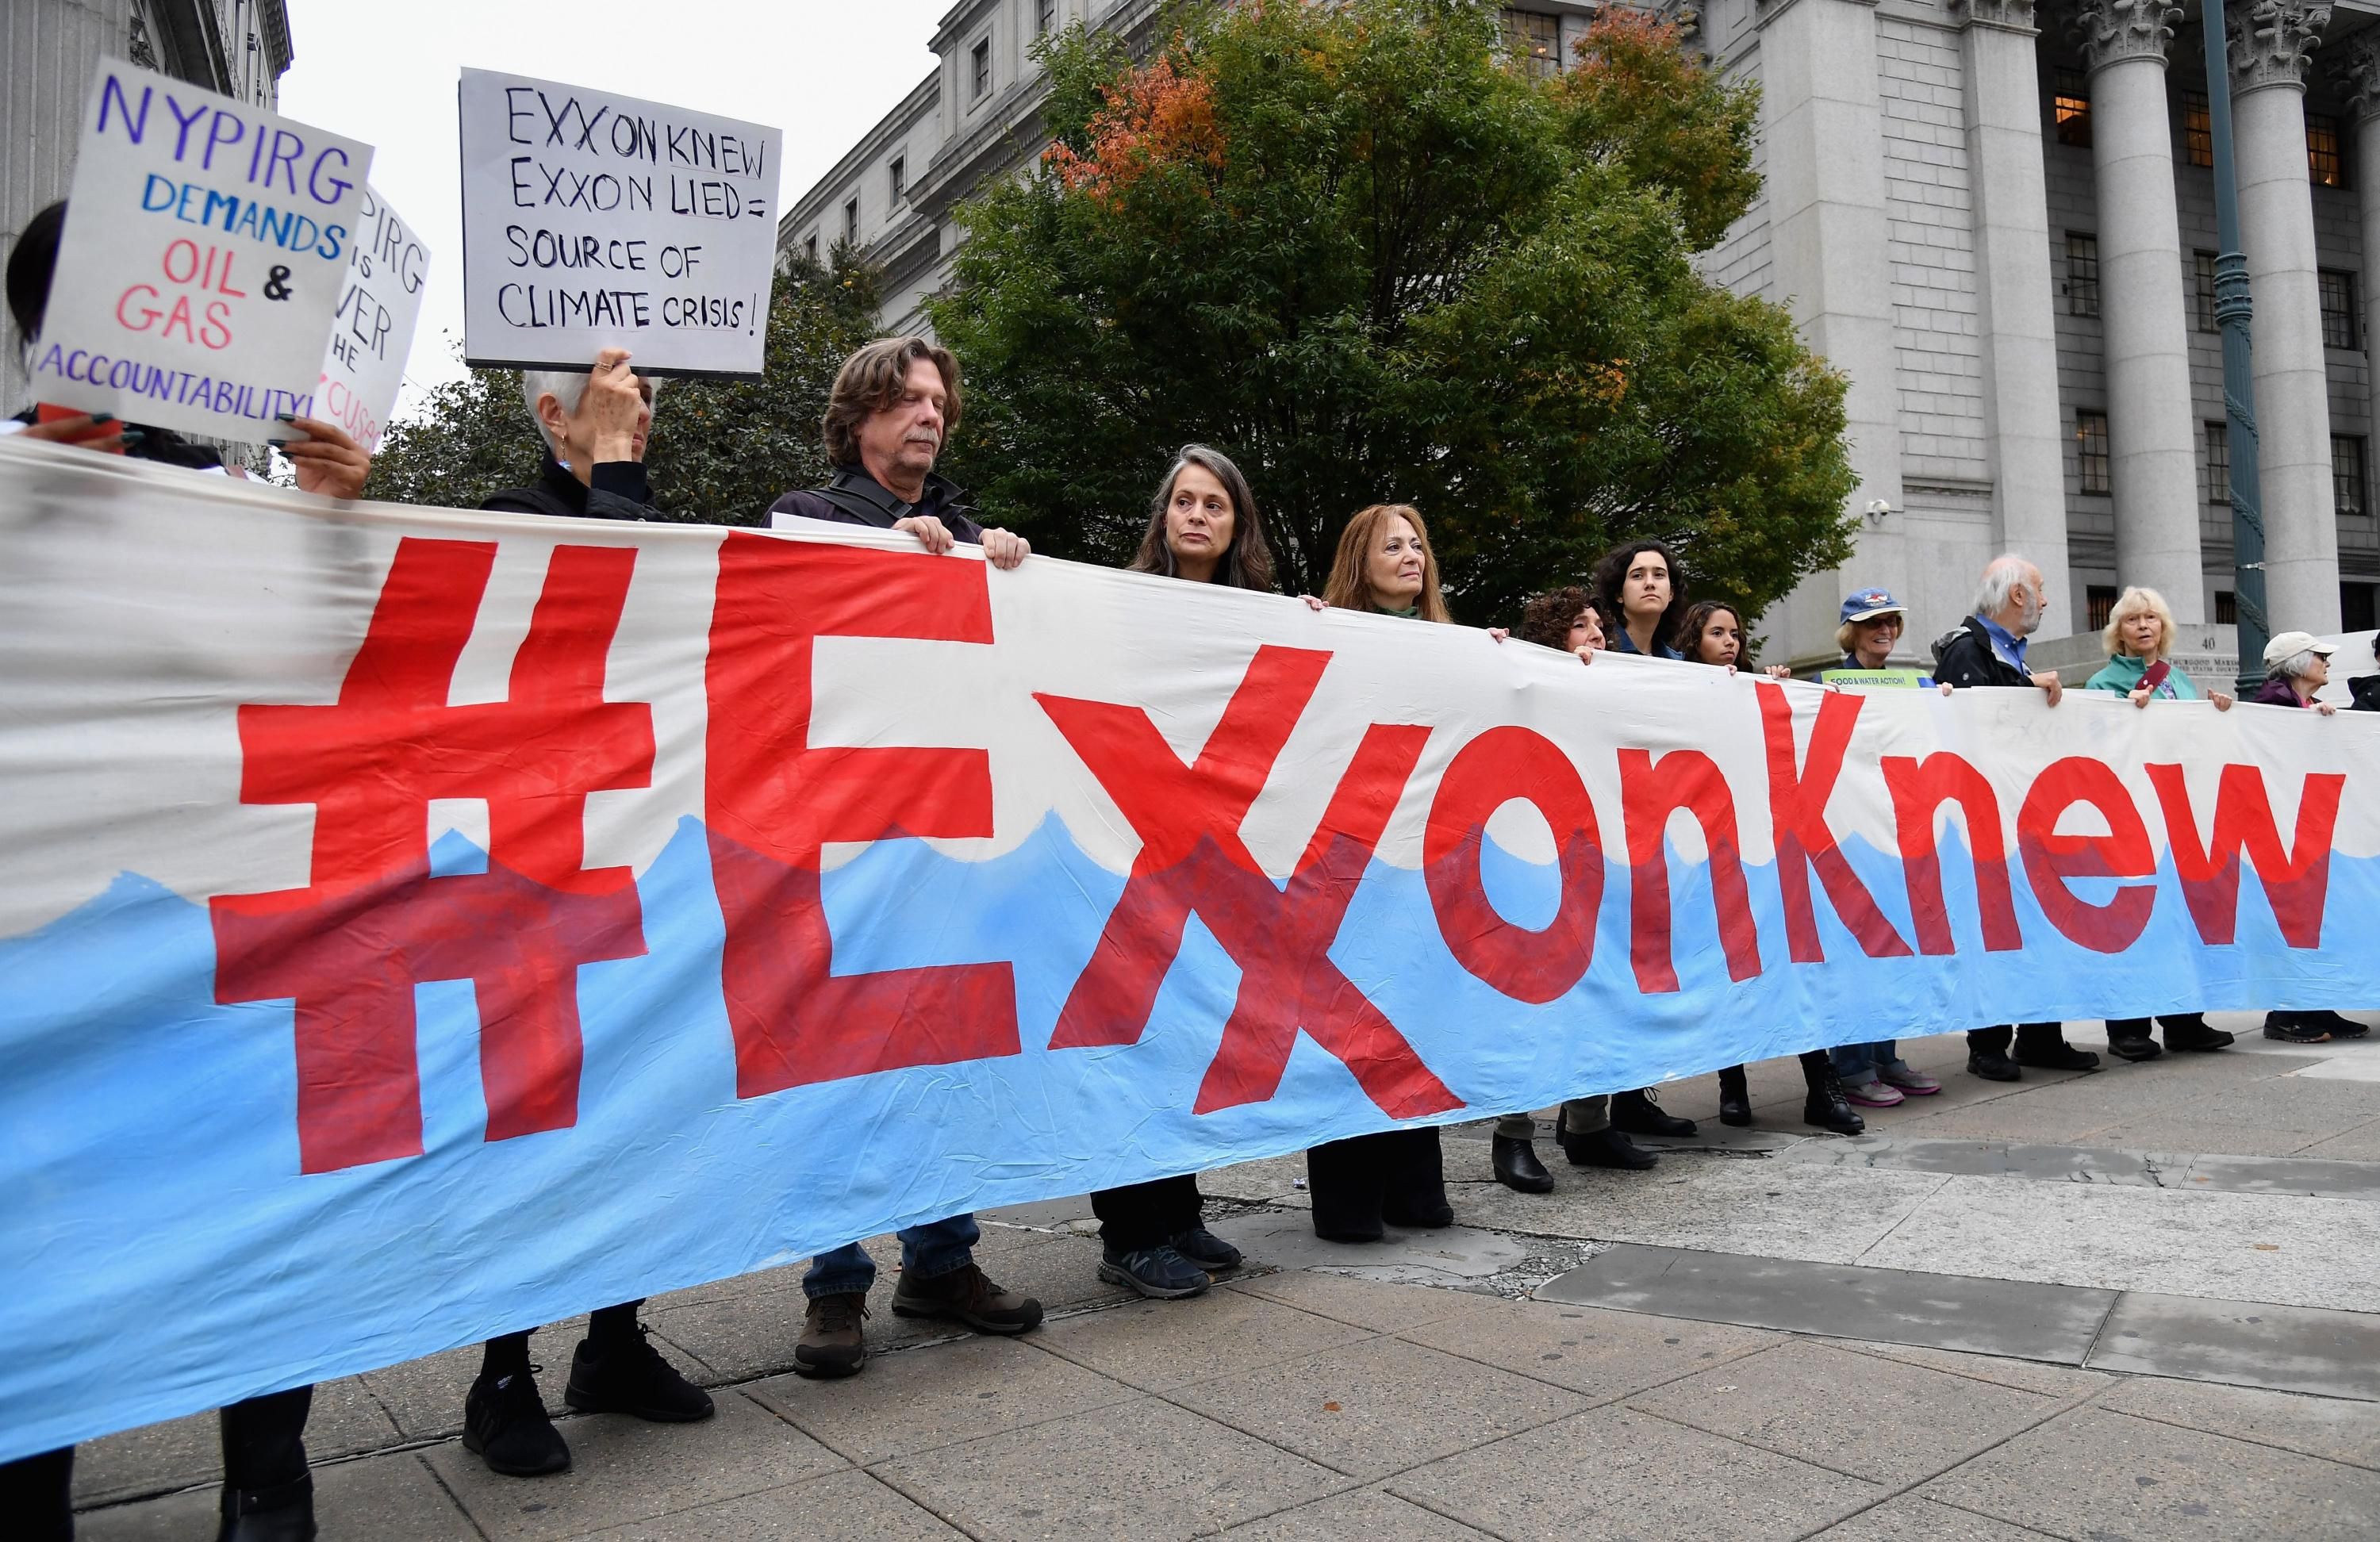 Exxon Mobil protest